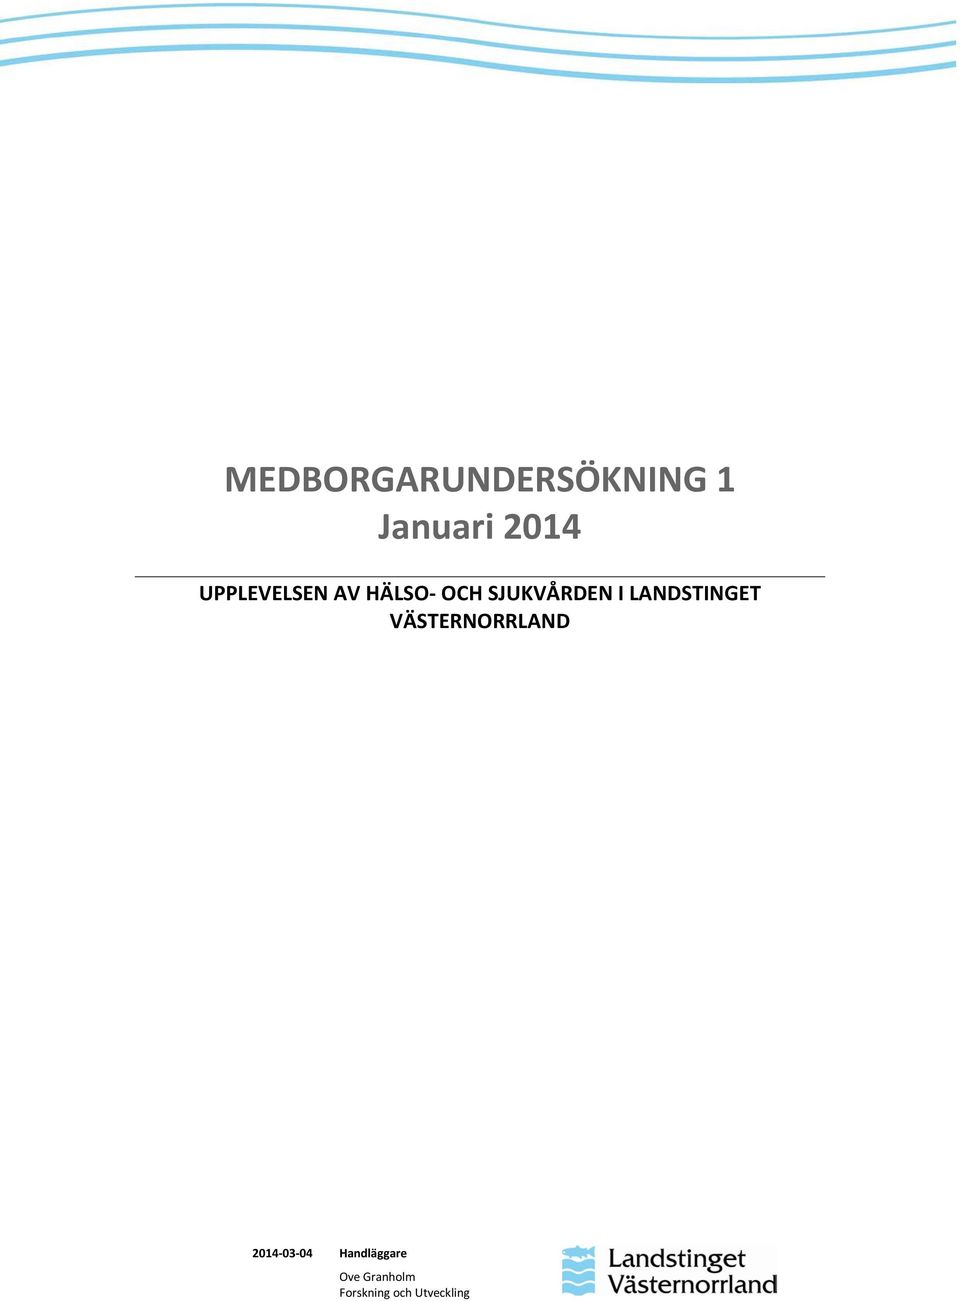 LANDSTINGET VÄSTERNORRLAND 2014-03-04